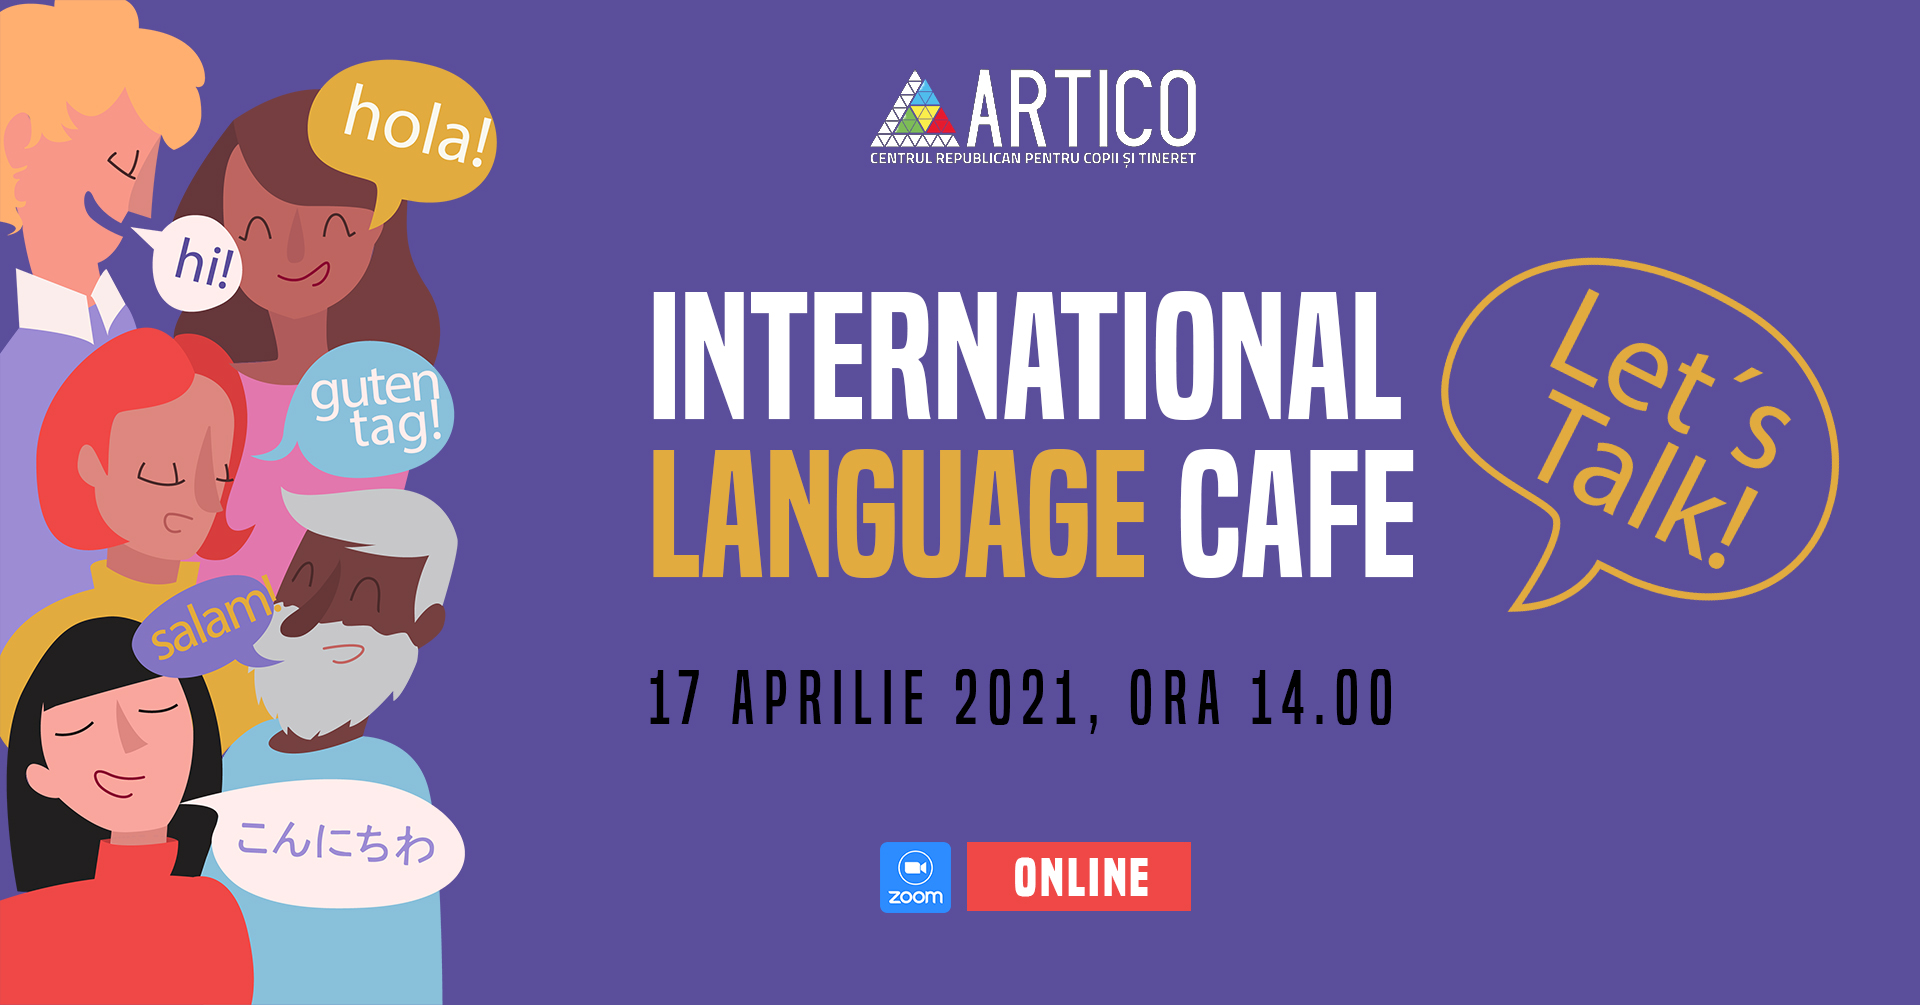 international language cafe artico